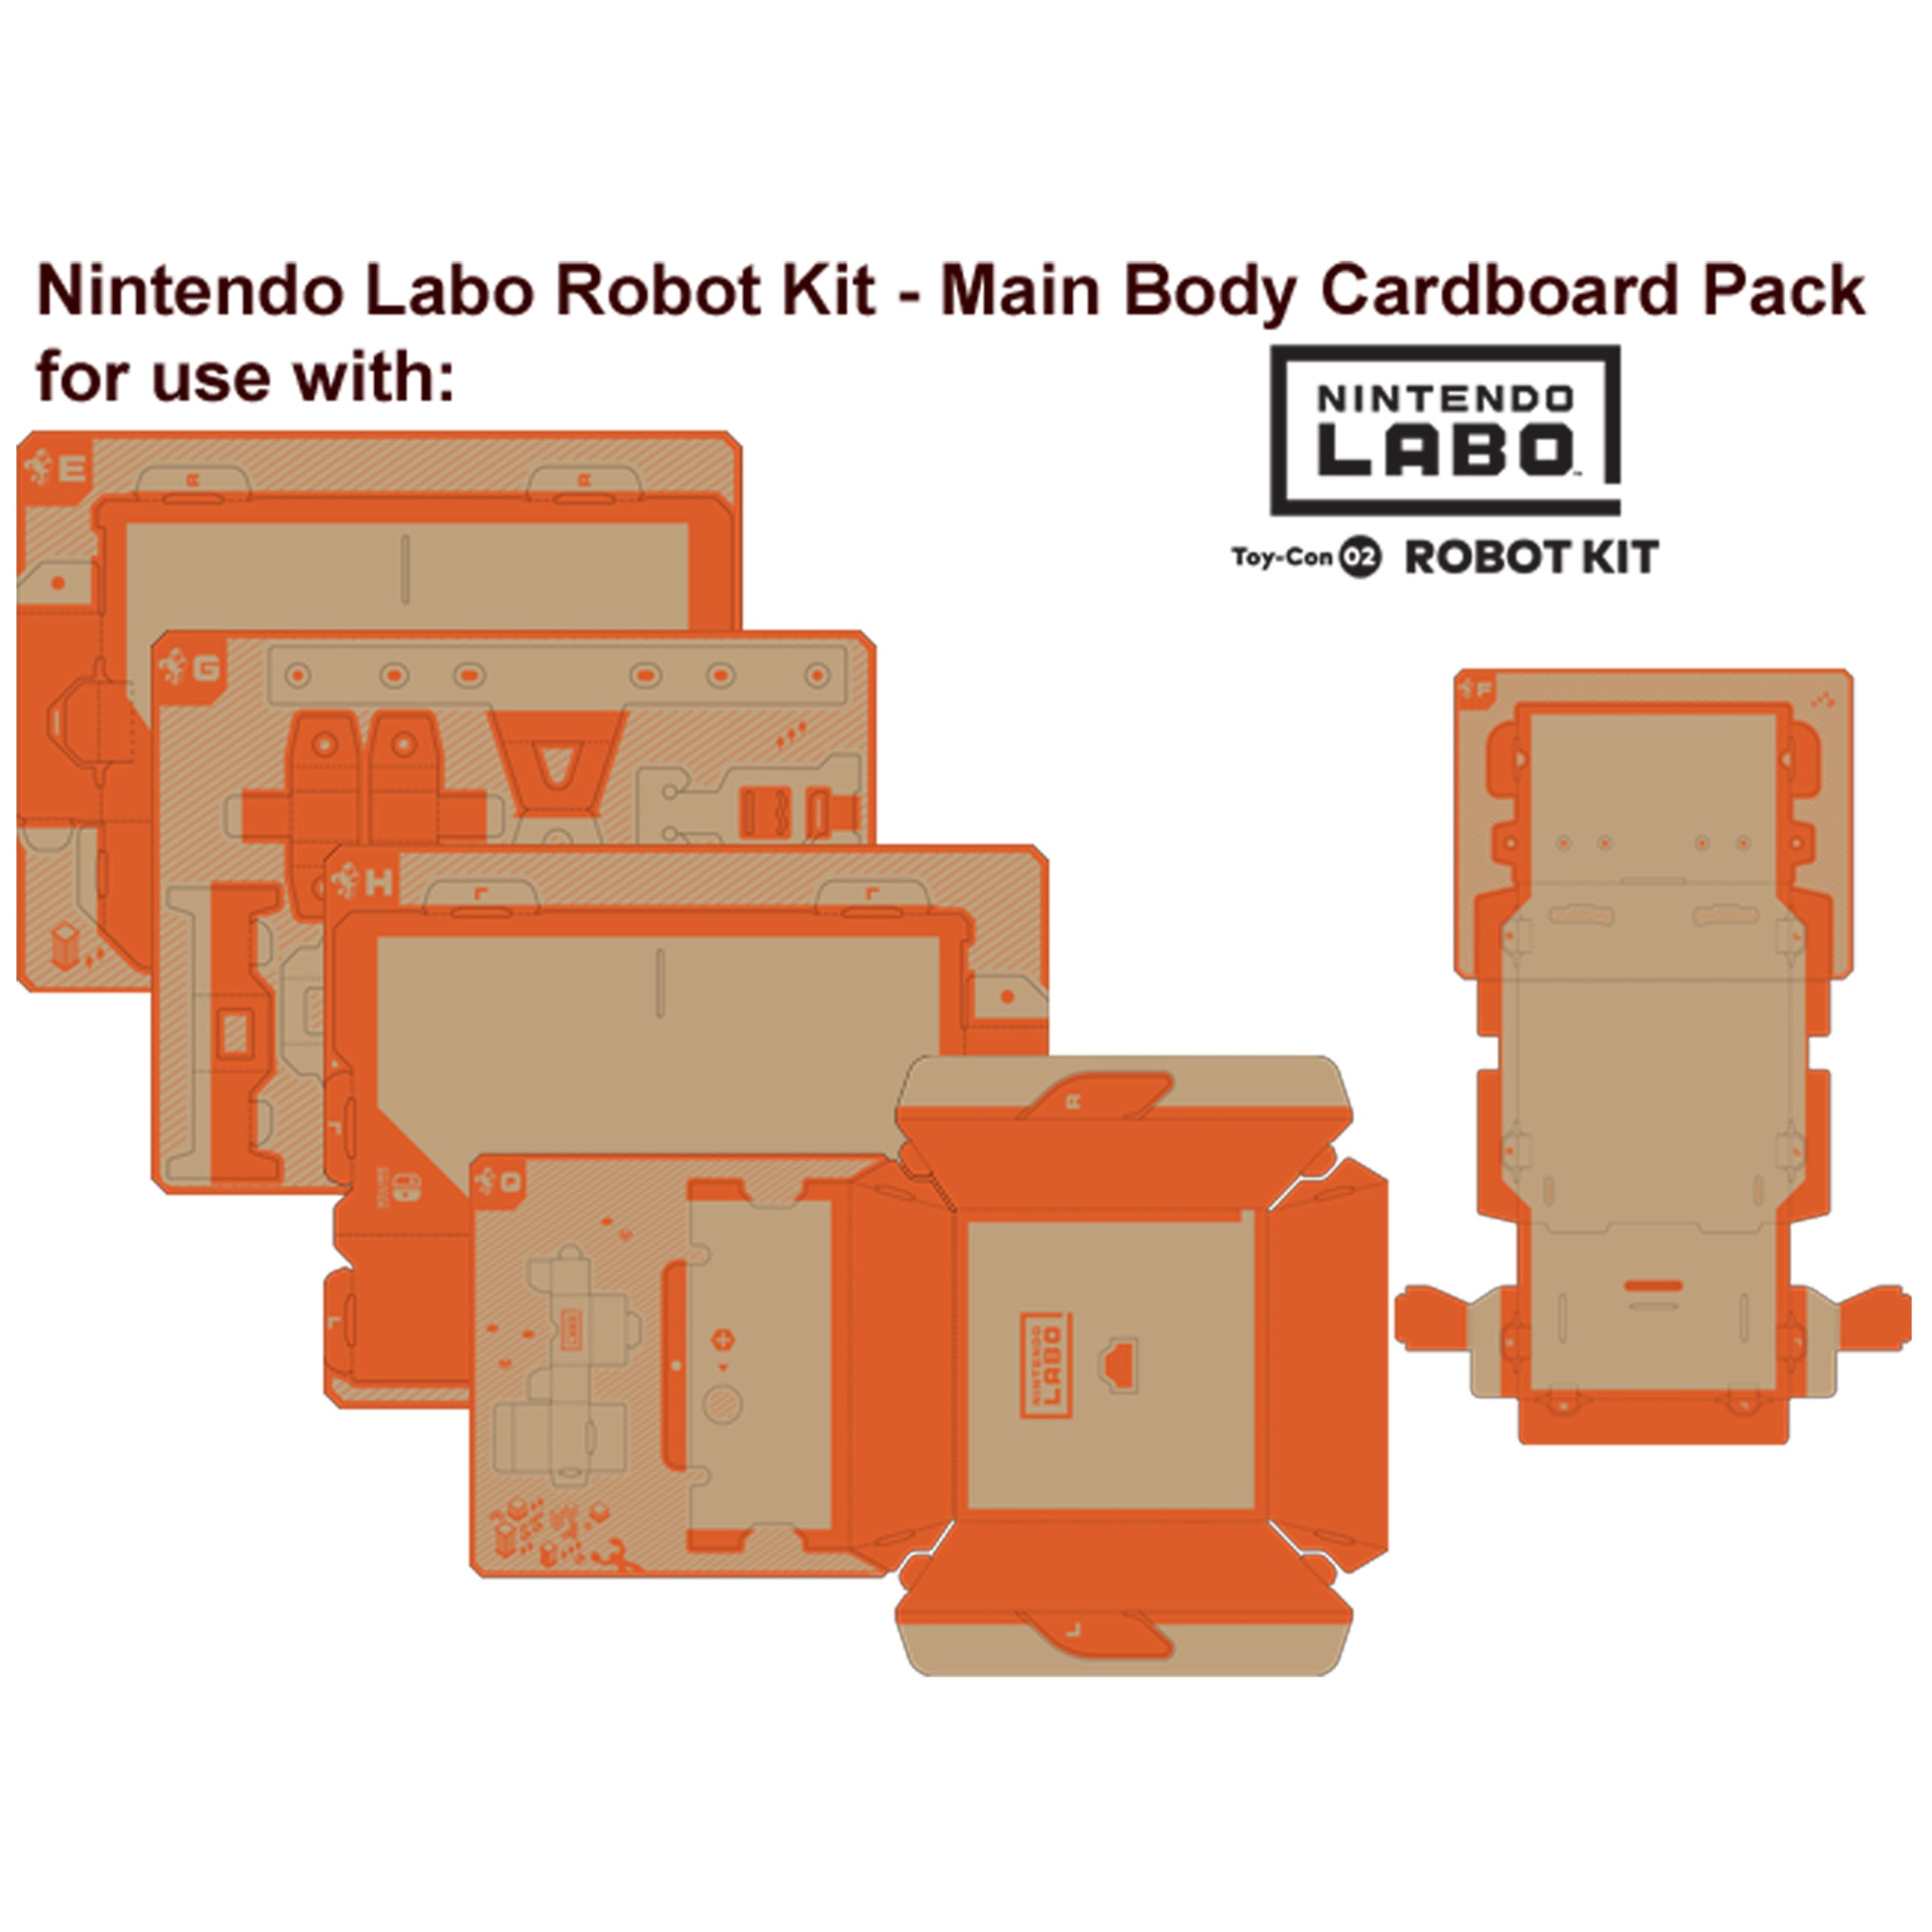 Nintendo Labo Robot Kit - Main Body Cardboard Pack - Hardware